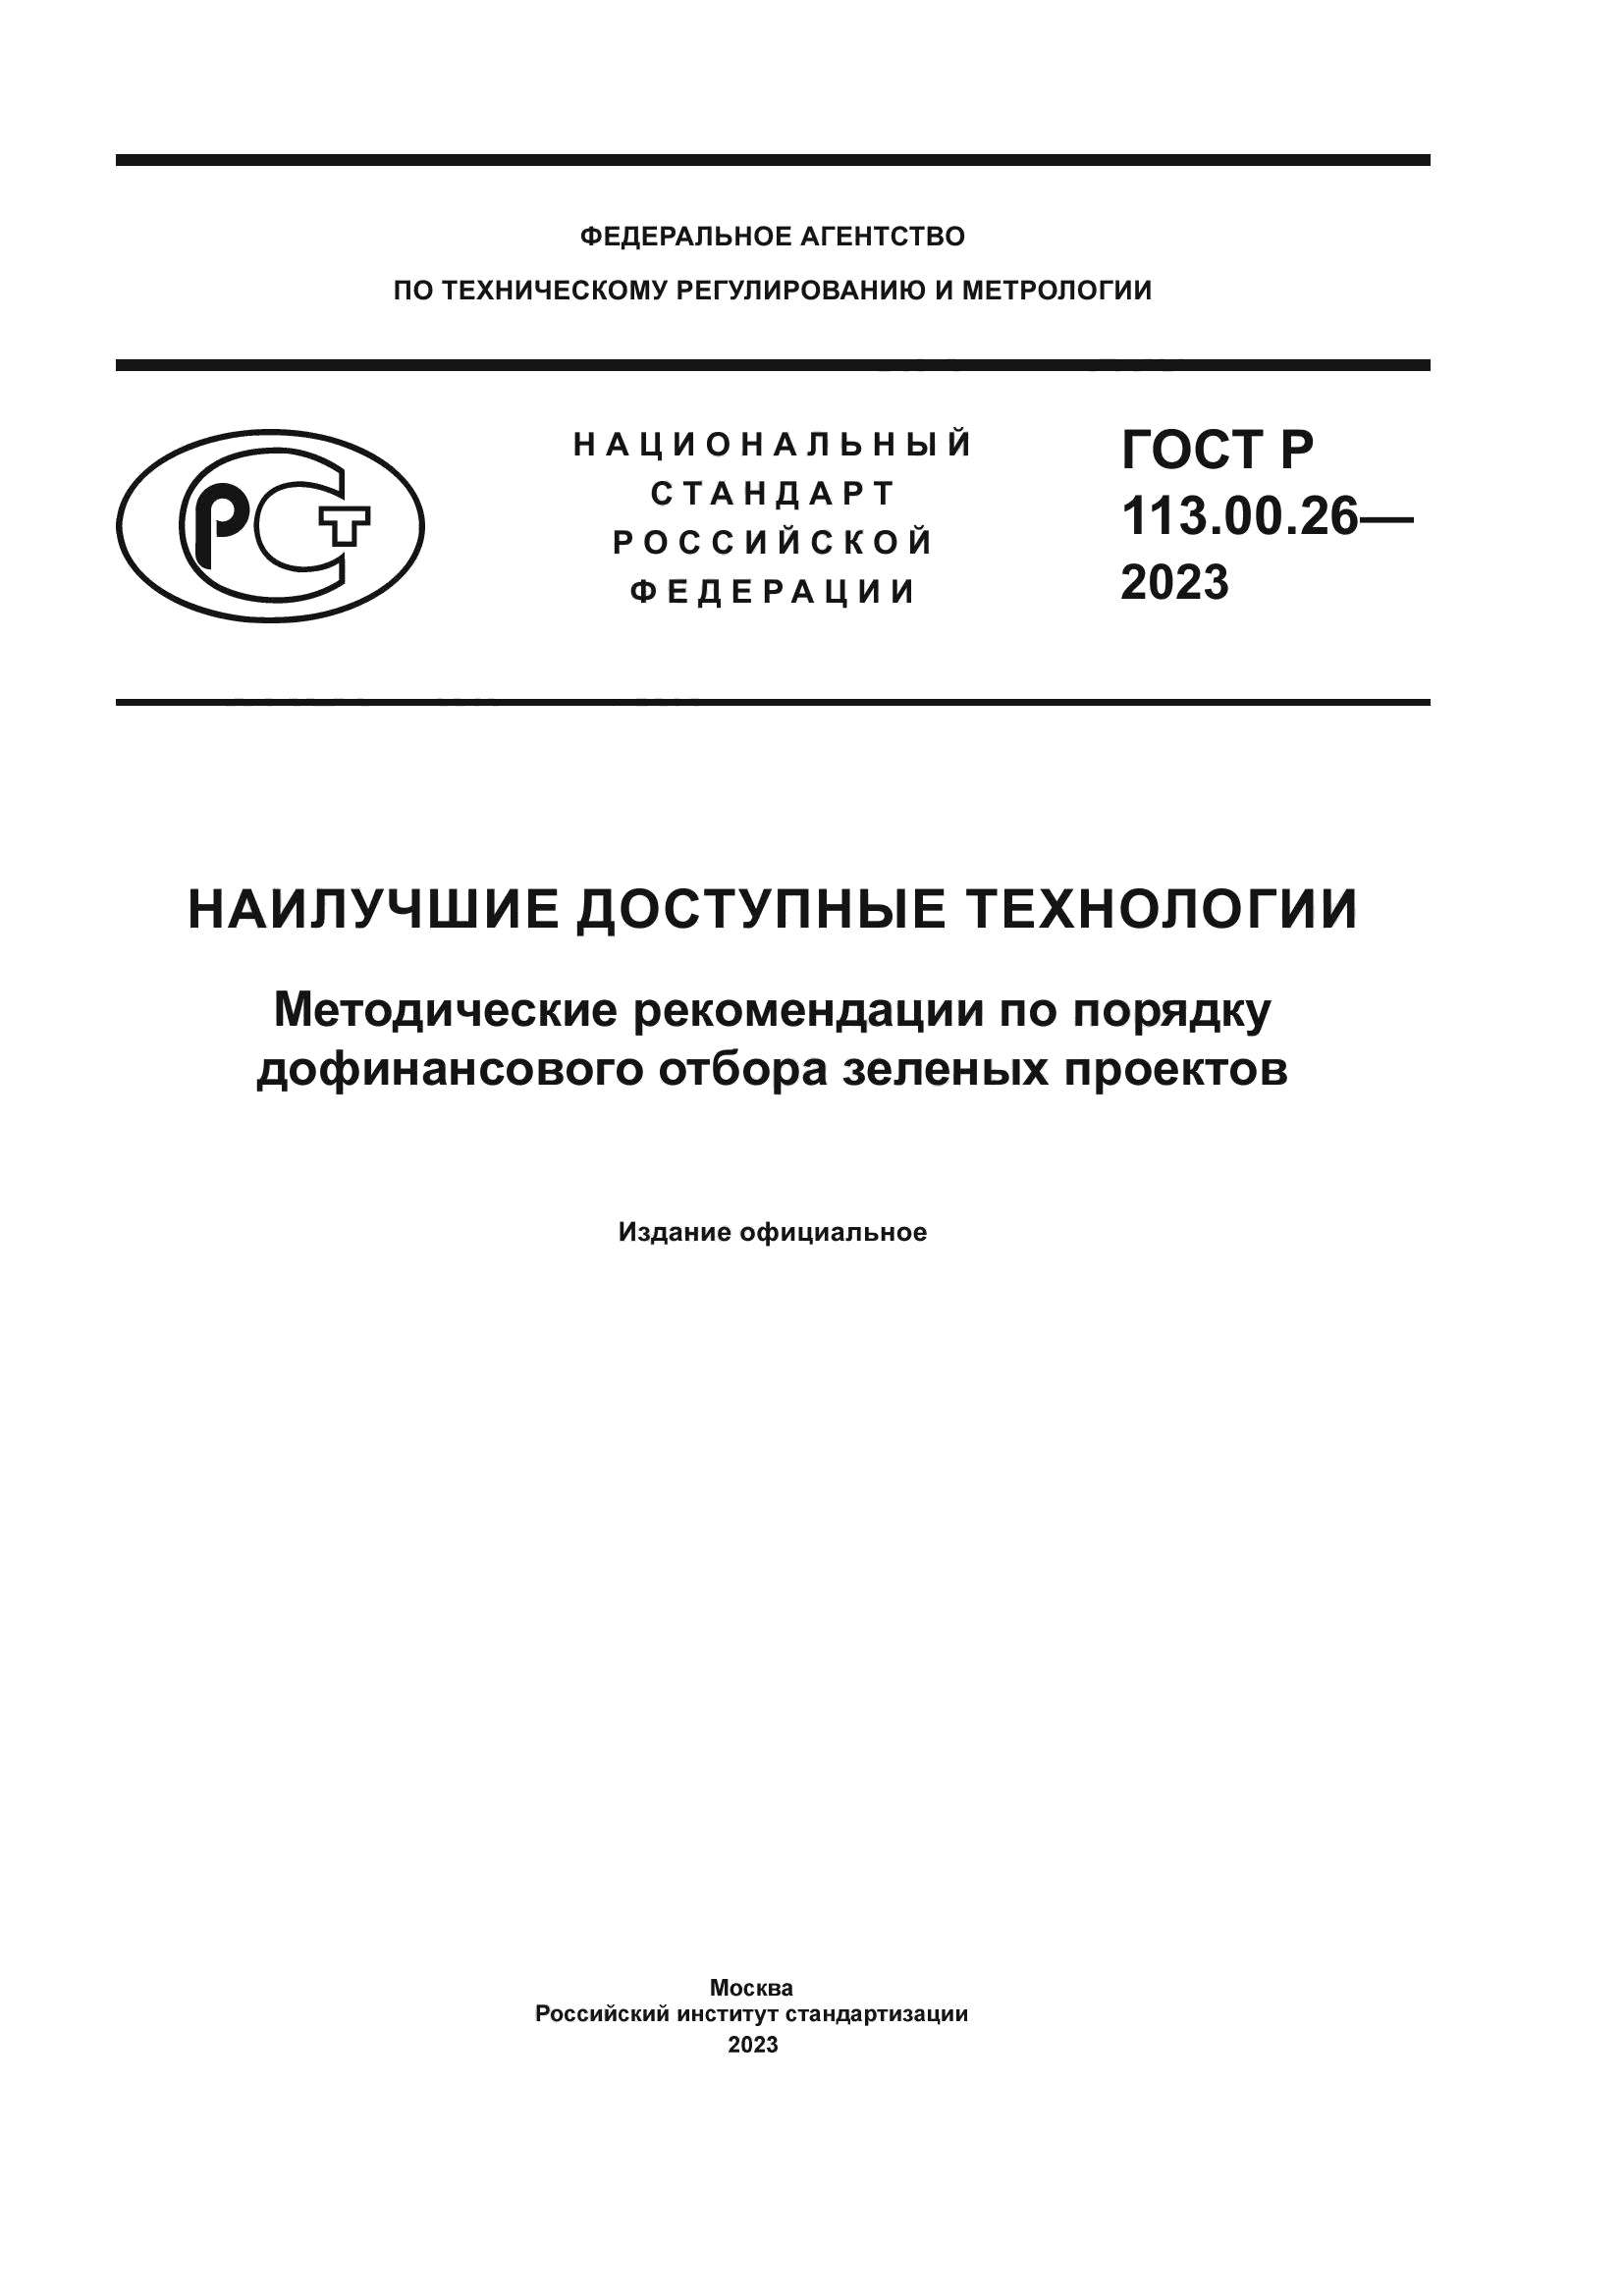 ГОСТ Р 113.00.26-2023